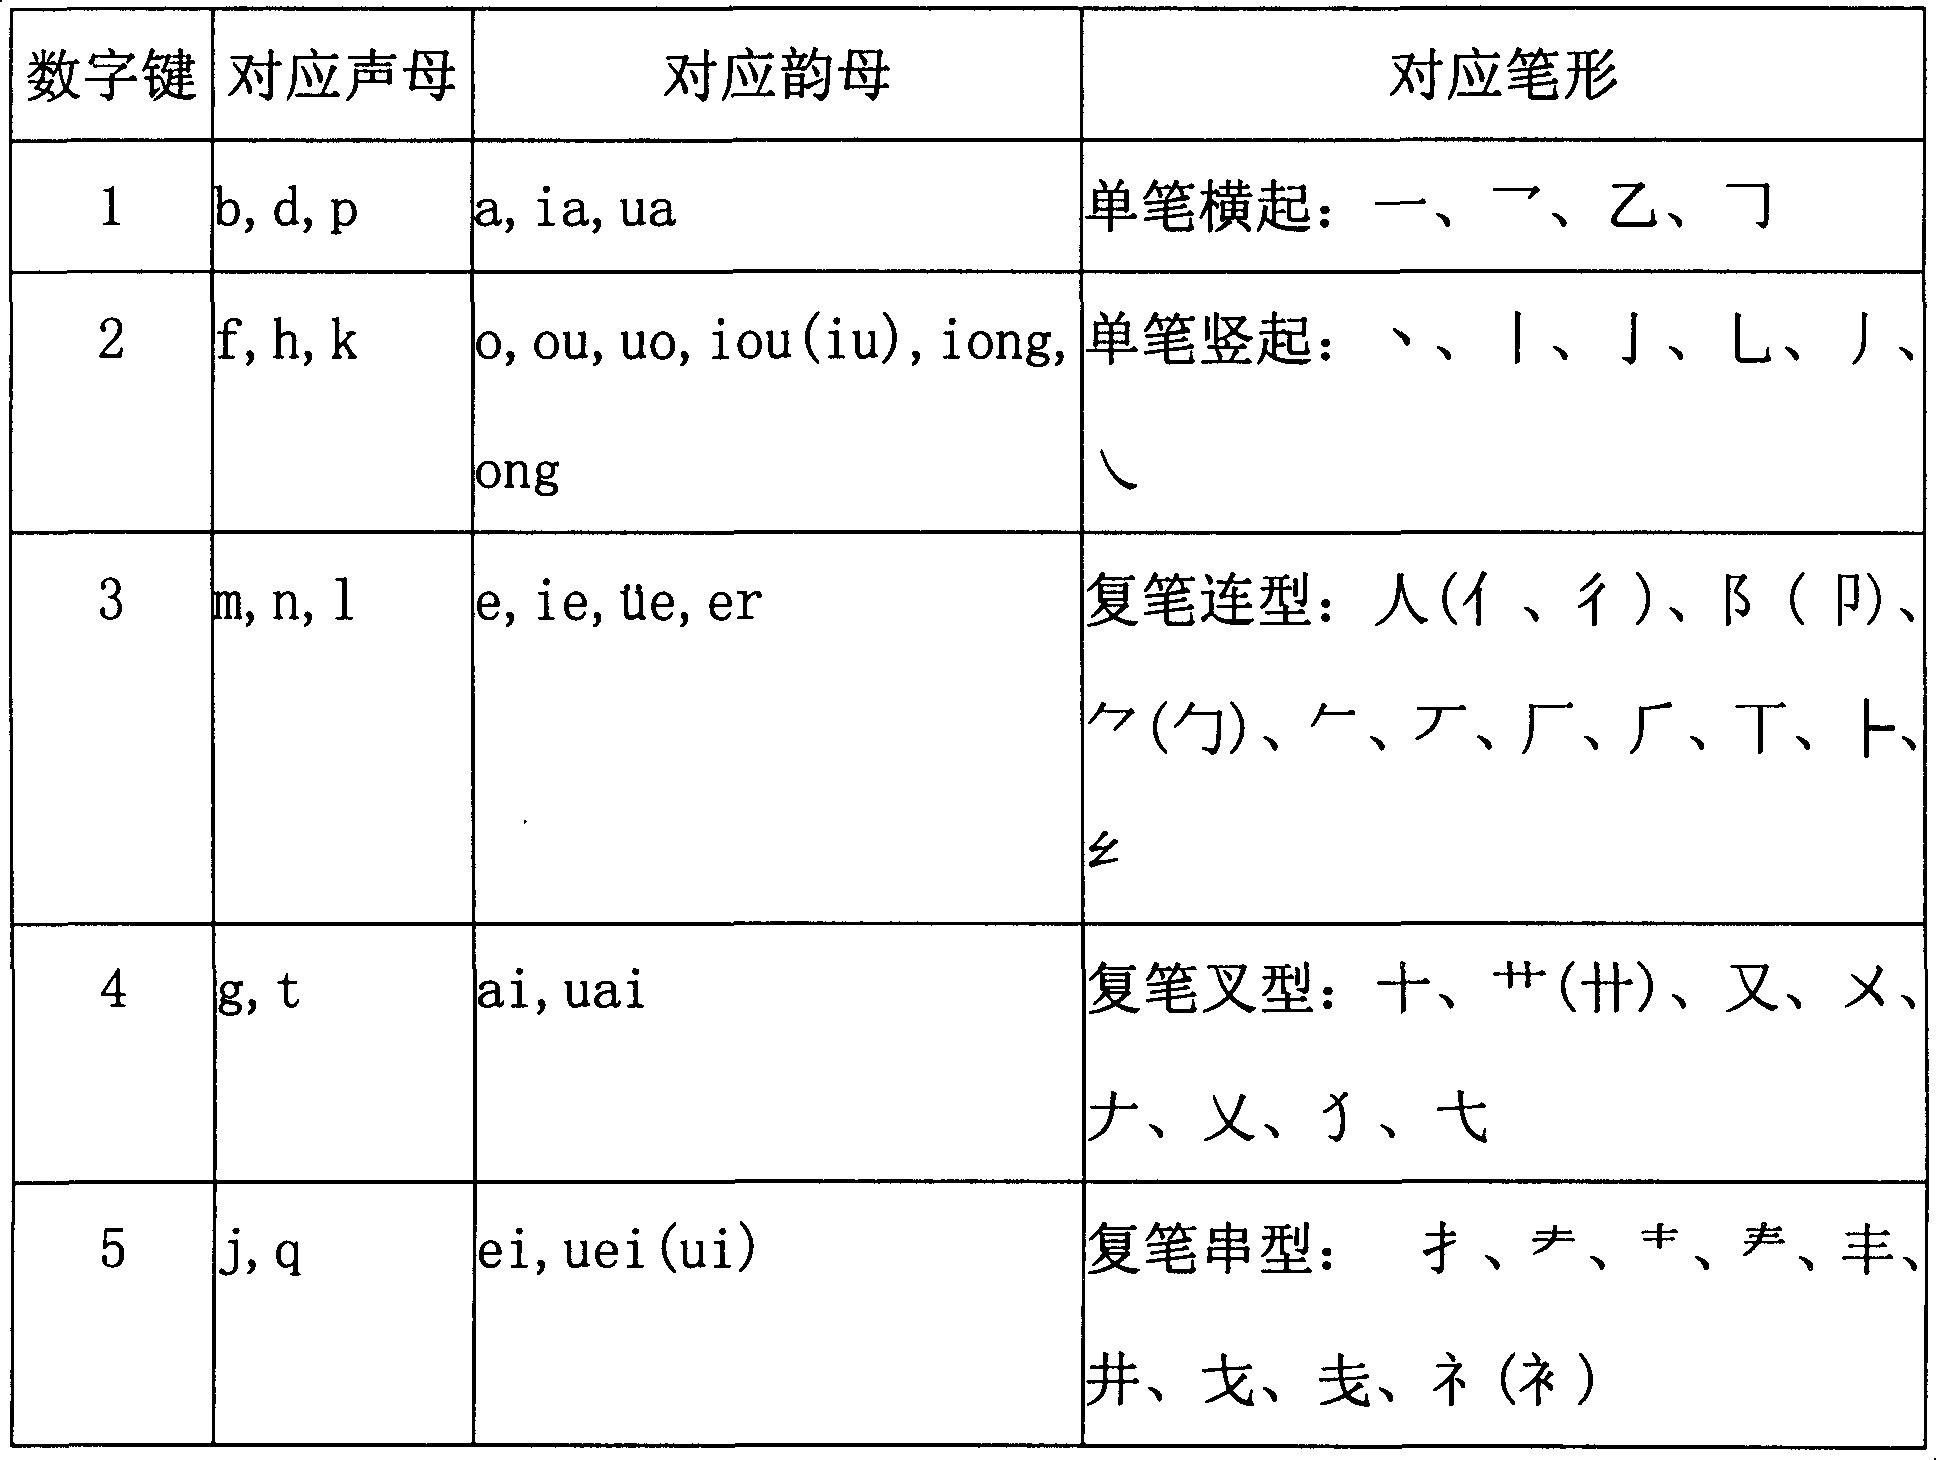 Sound-shape digital Chinese character input method